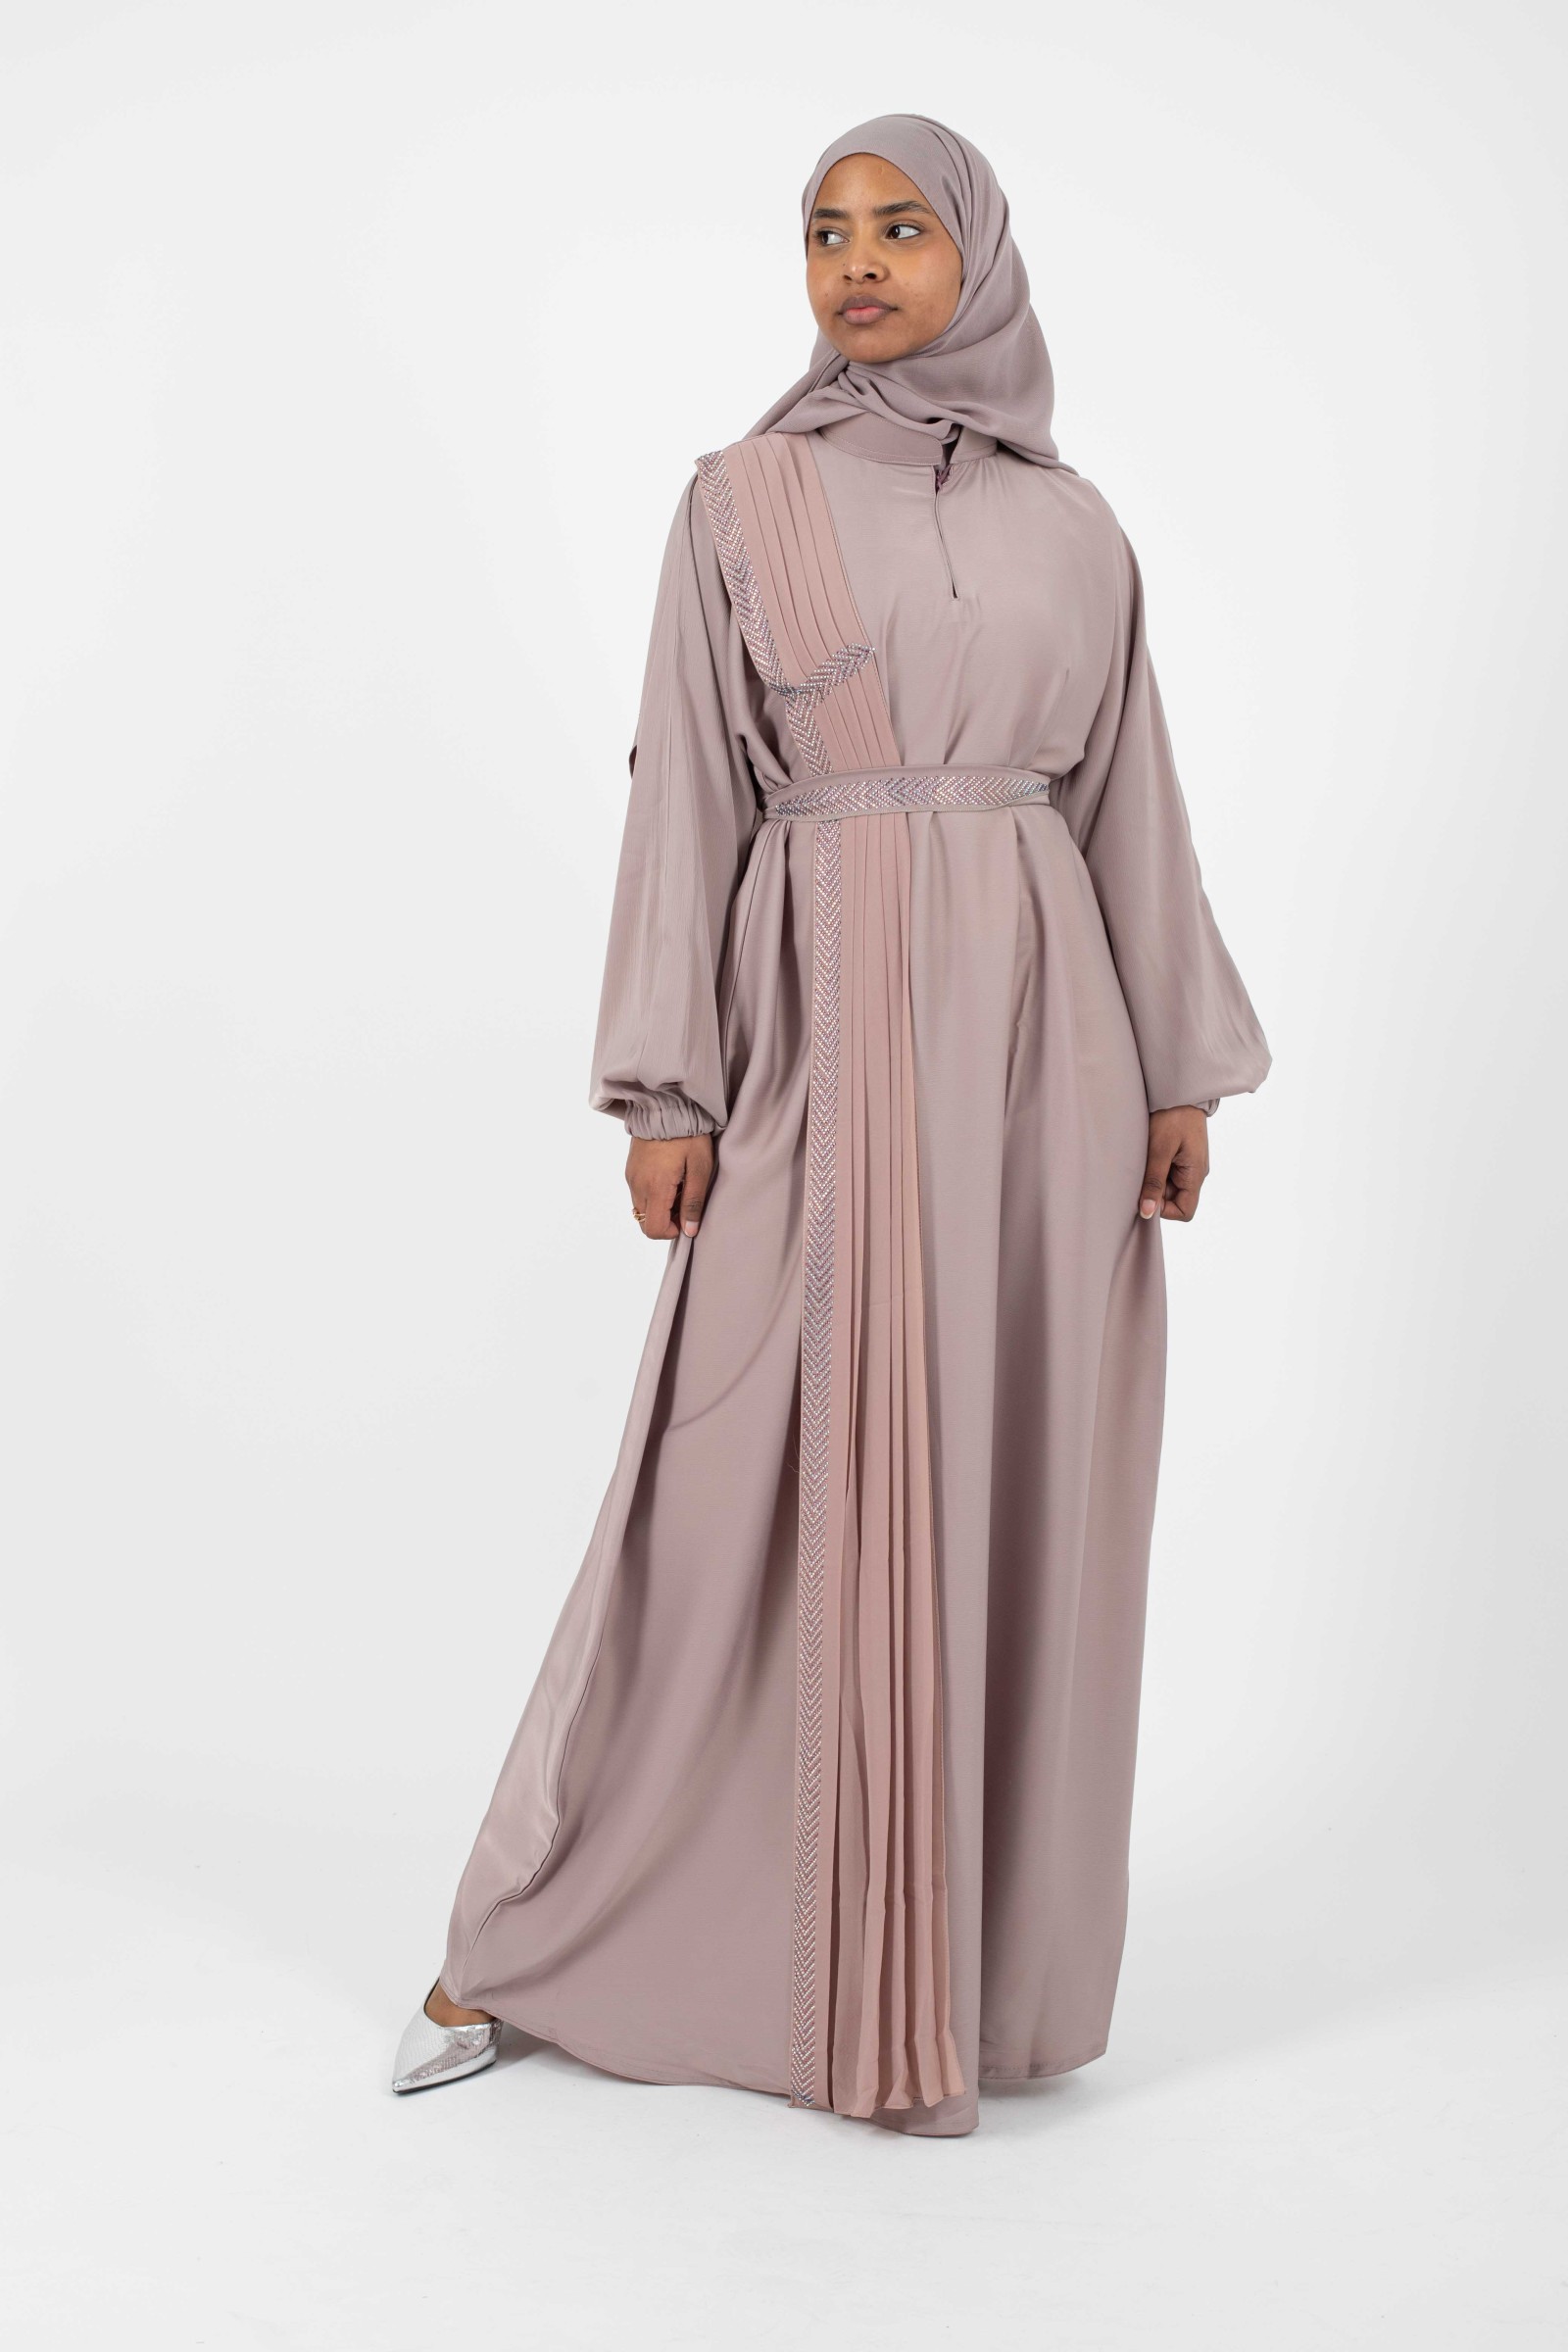 Abaya dubai femme musulmane chic et moderne